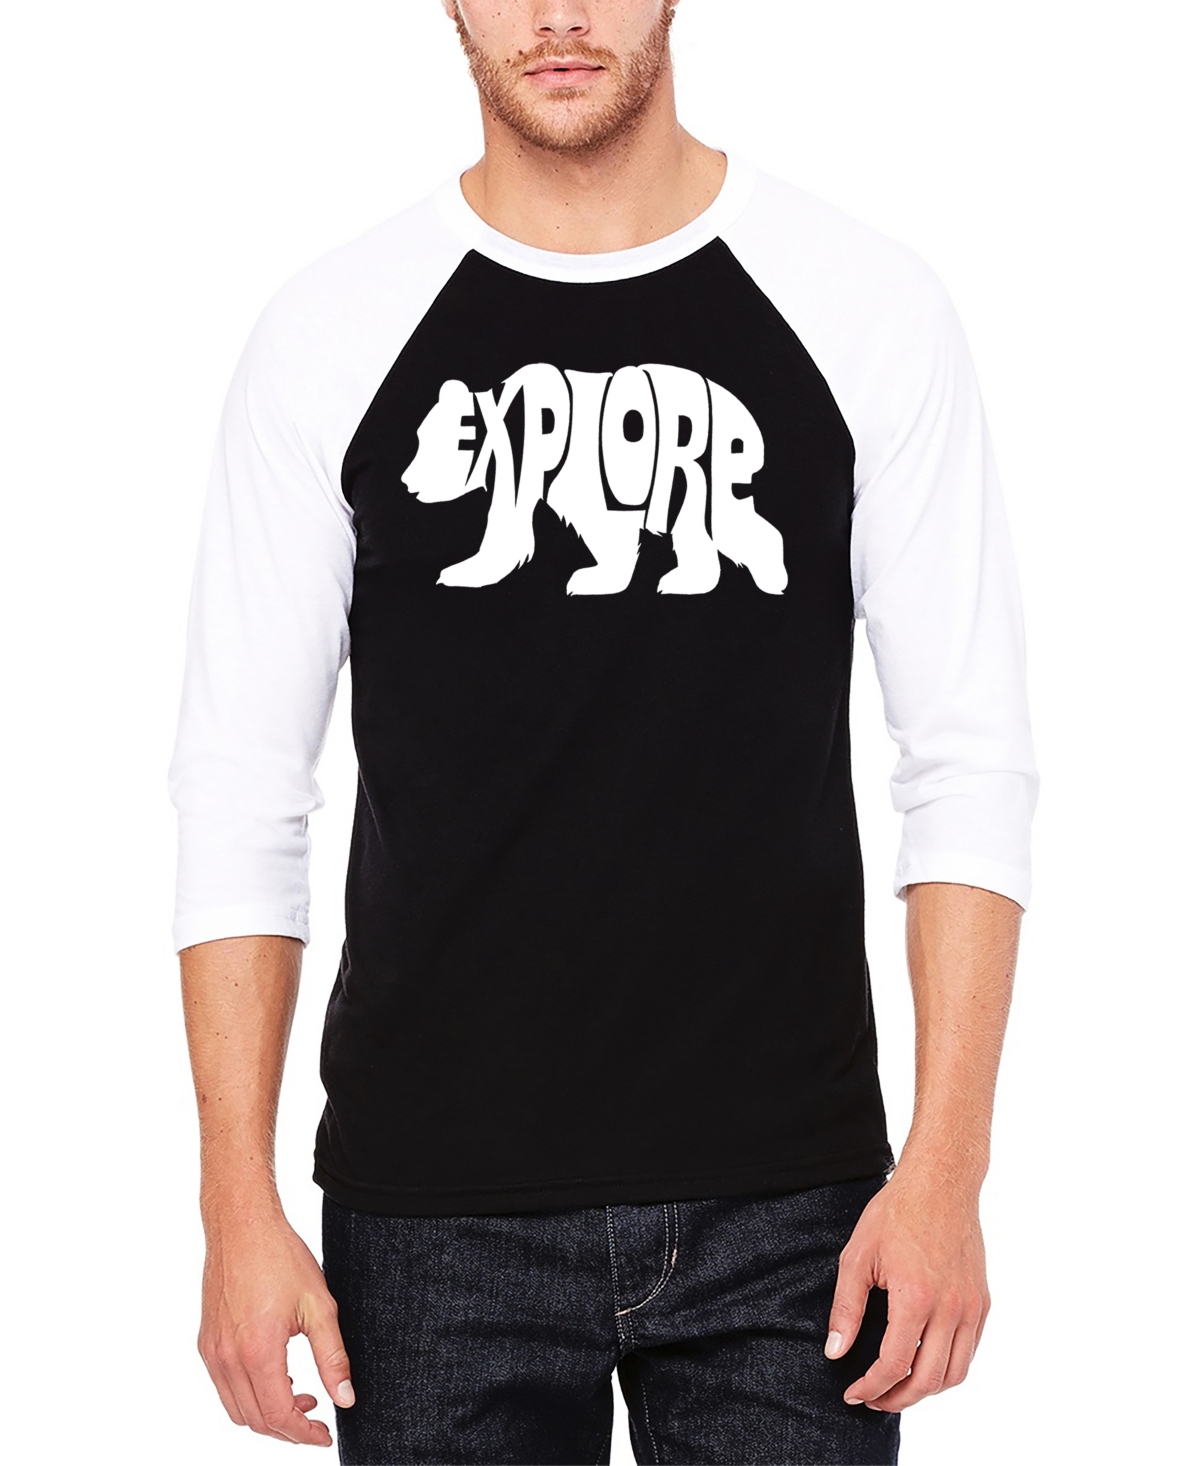 Explore - Men's Raglan Baseball Word Art T-Shirt - Grey